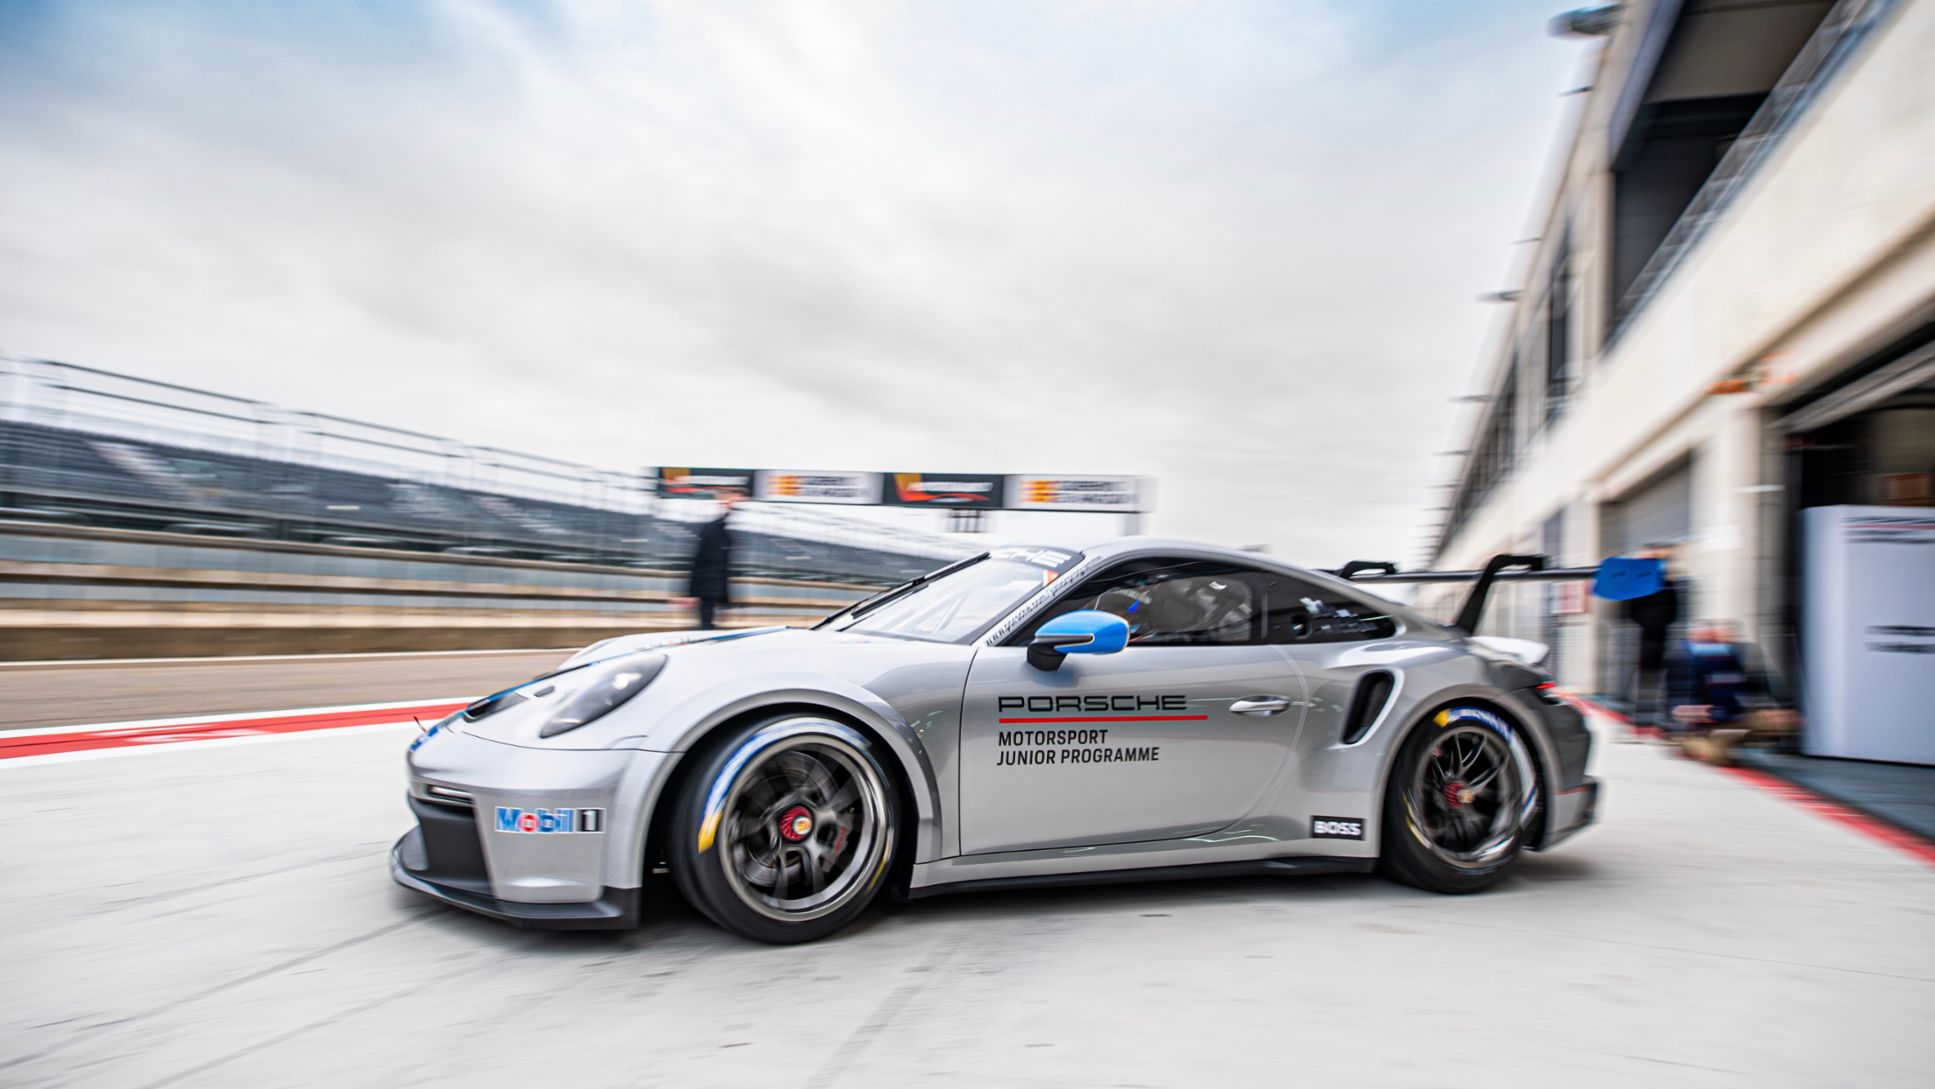 Porsche Motorsport Junior Programme, 911 GT3 Cup, 2022, Porsche AG